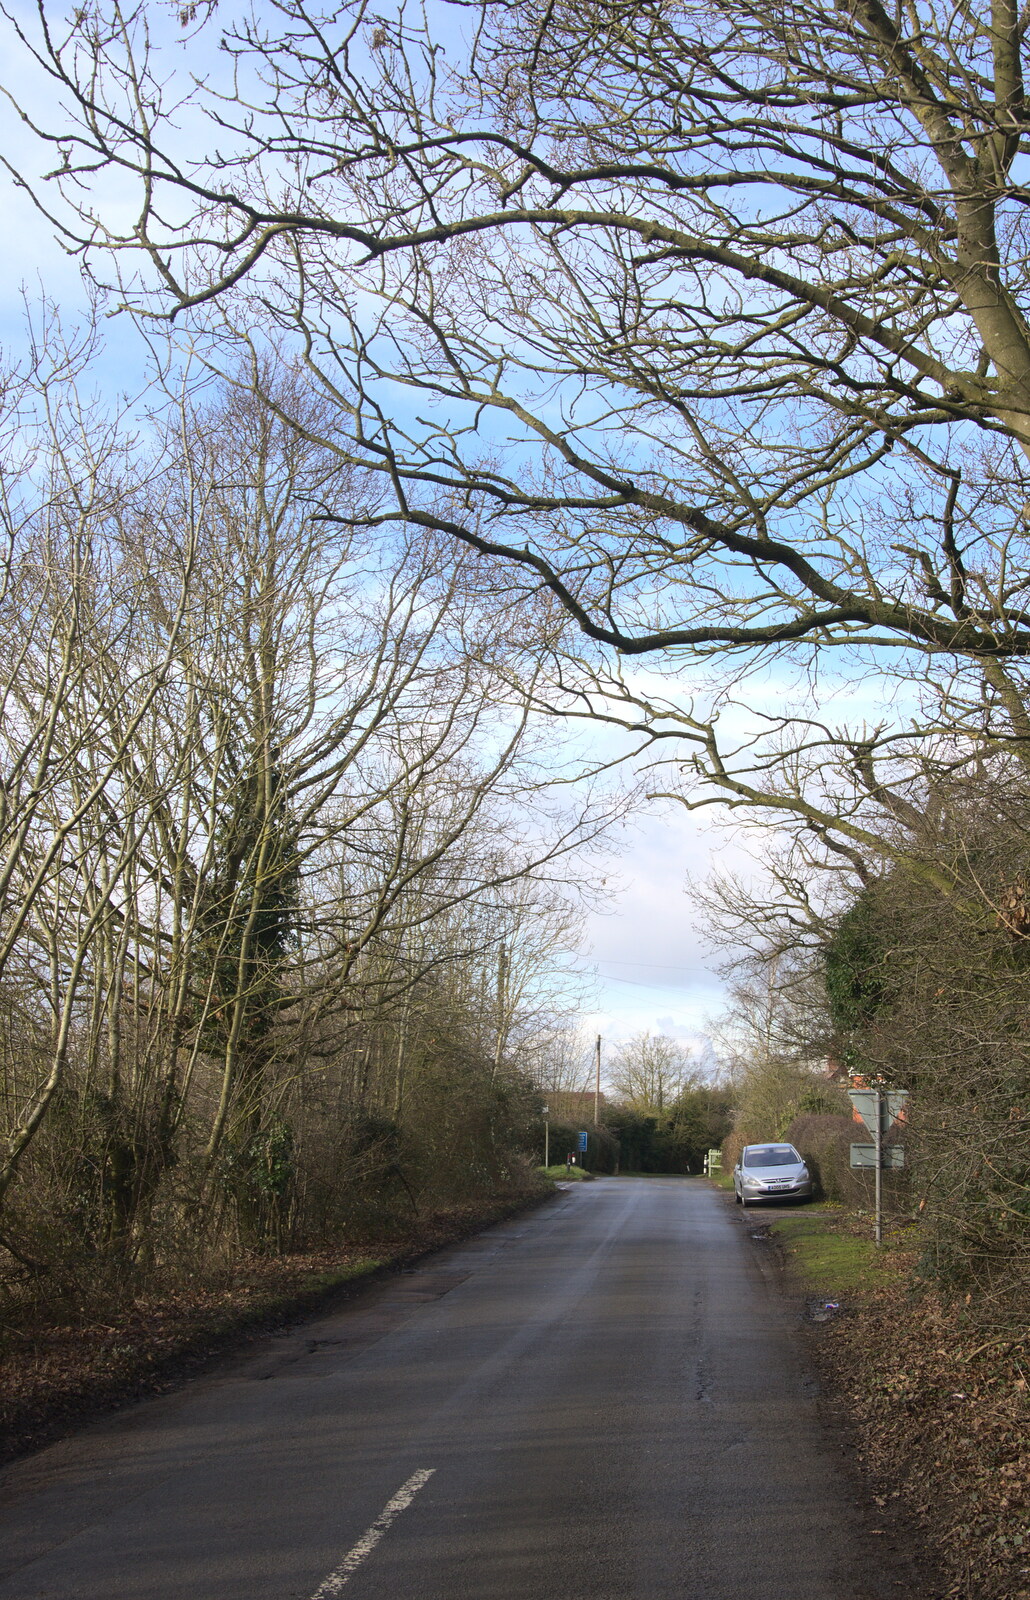 The road to Thrandeston from A Winter's Walk, Thrandeston, Suffolk - 5th February 2017